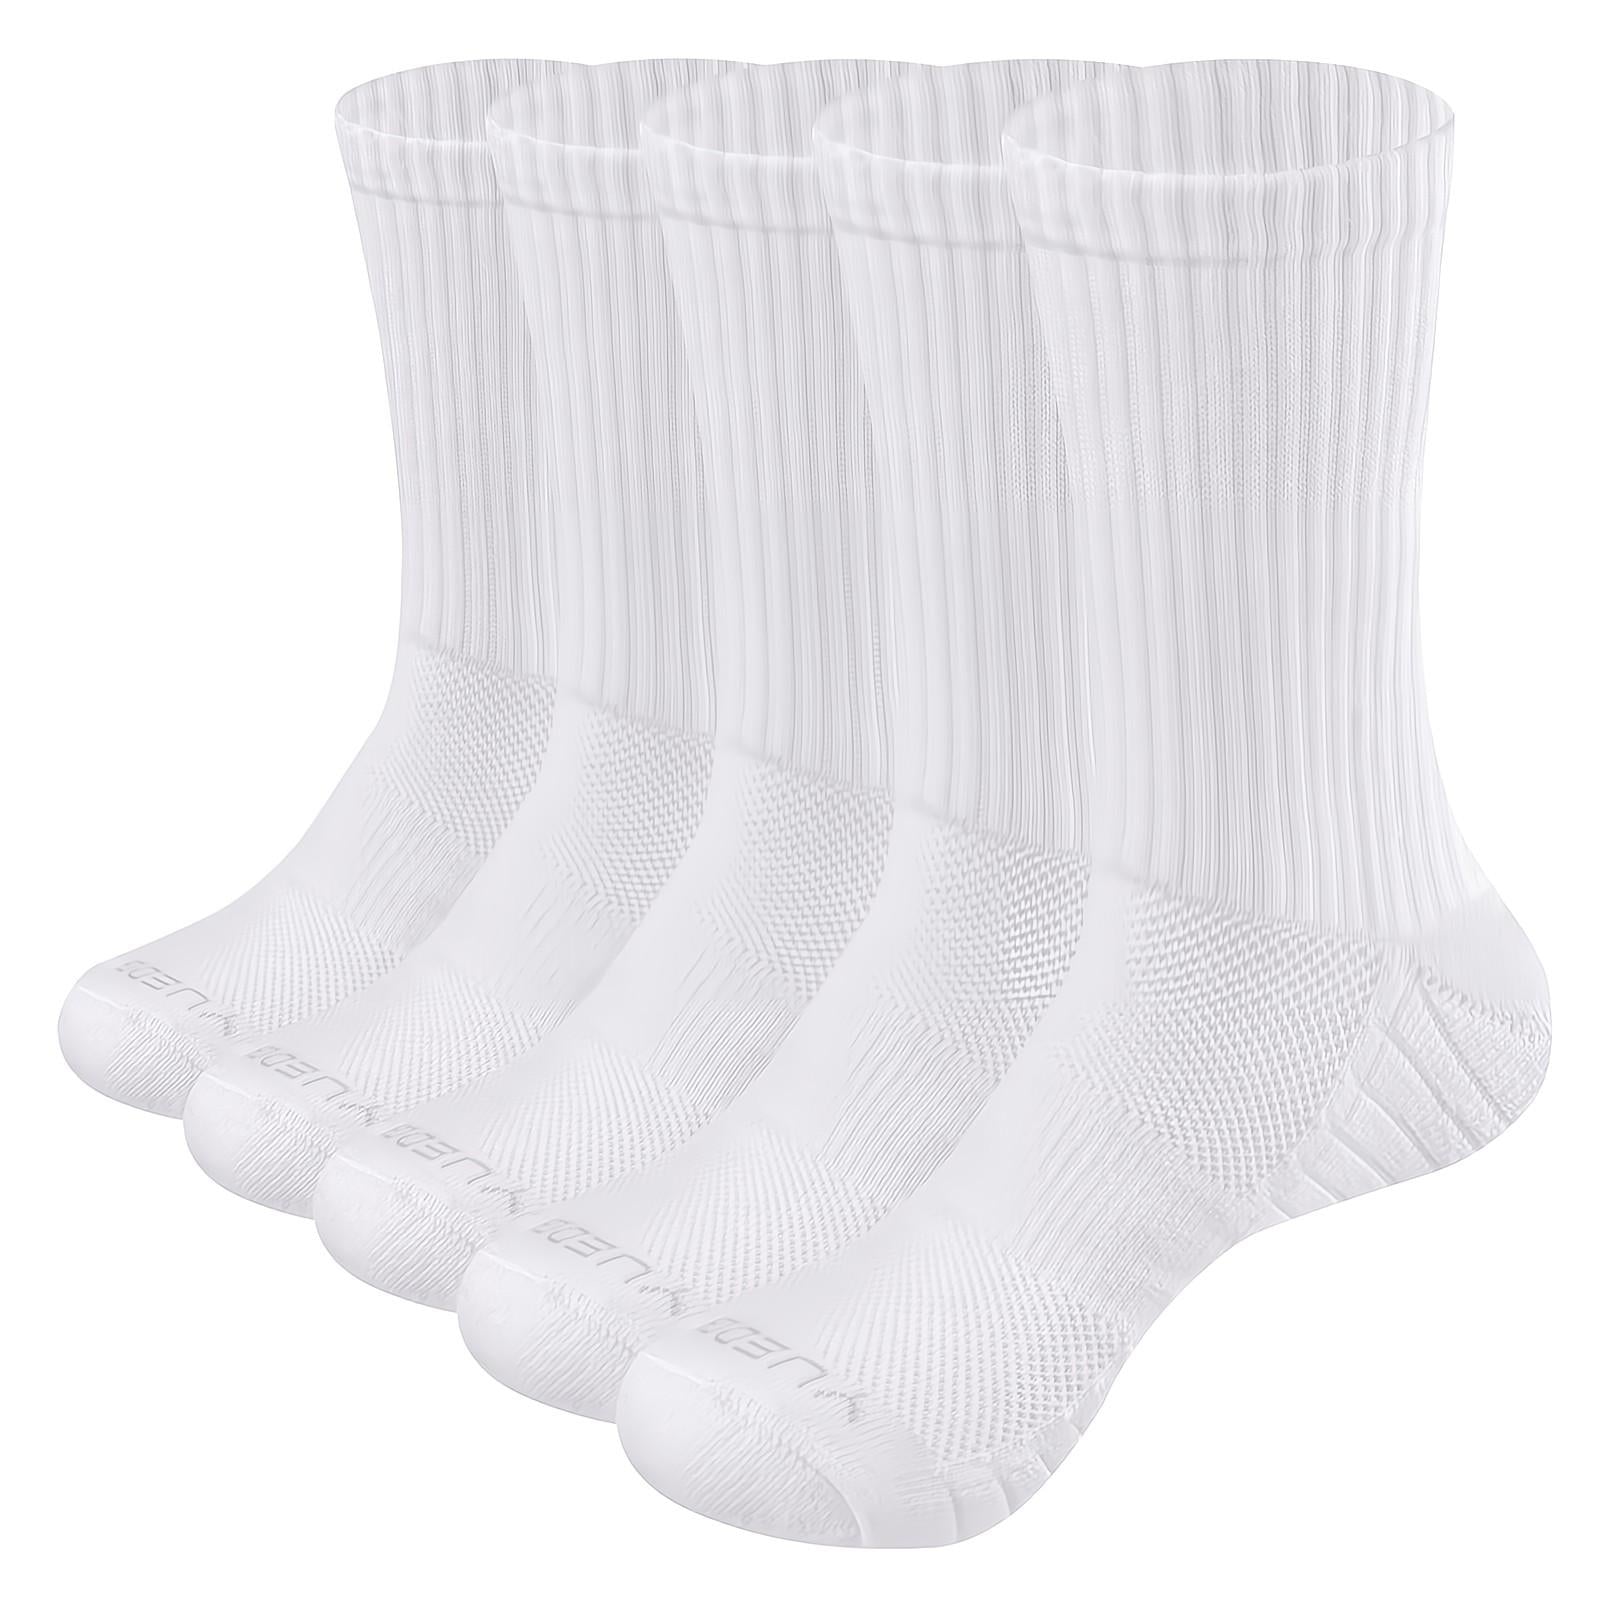 Buy white 5 pairs Thick Breathable Cotton Cushion  Hiking &amp; Trekking Socks 37-46 EU